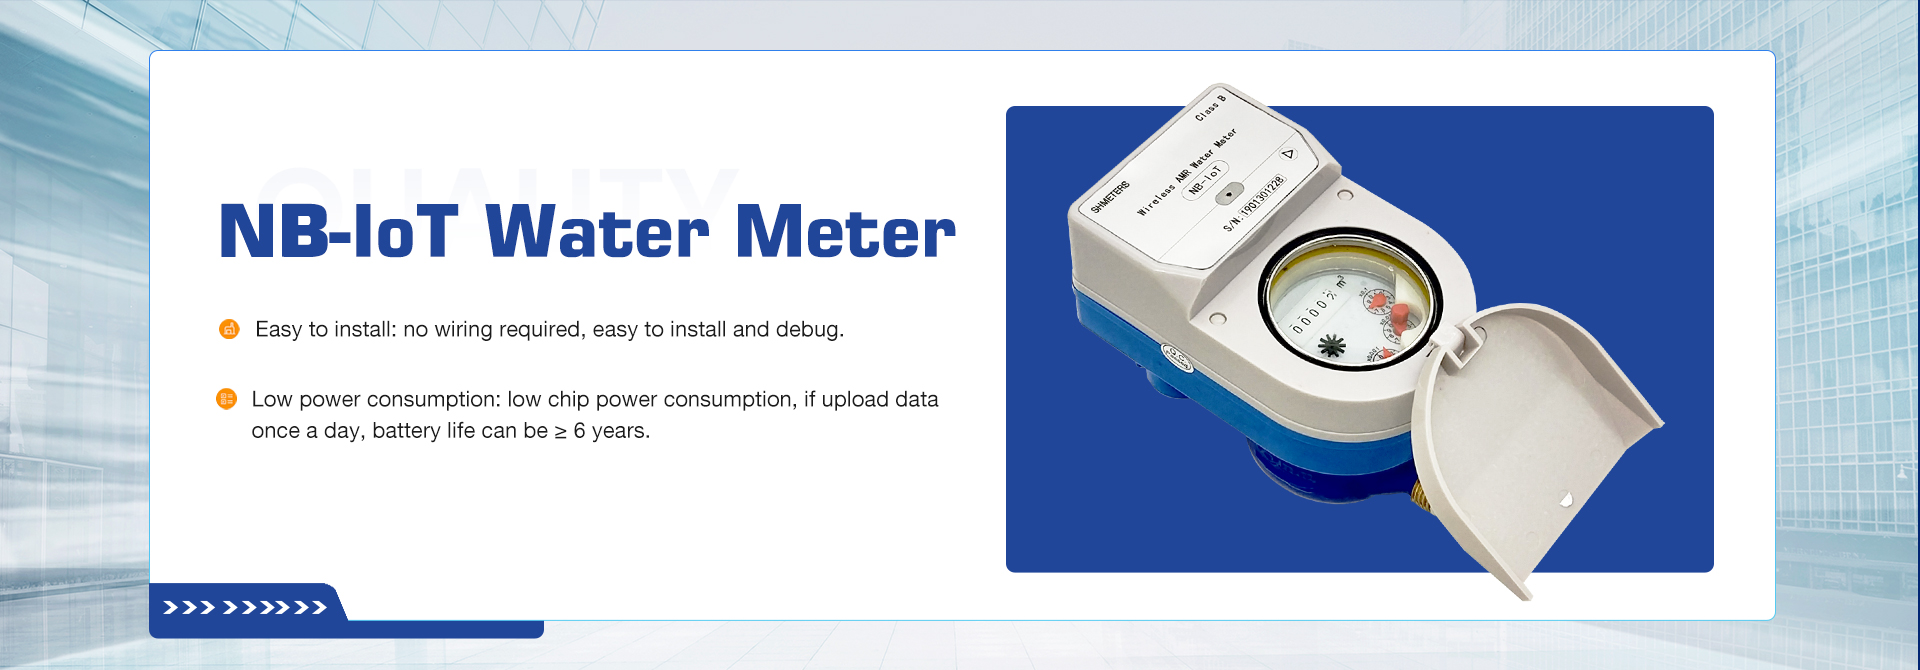 New type of water meter--NB-IoT water meter